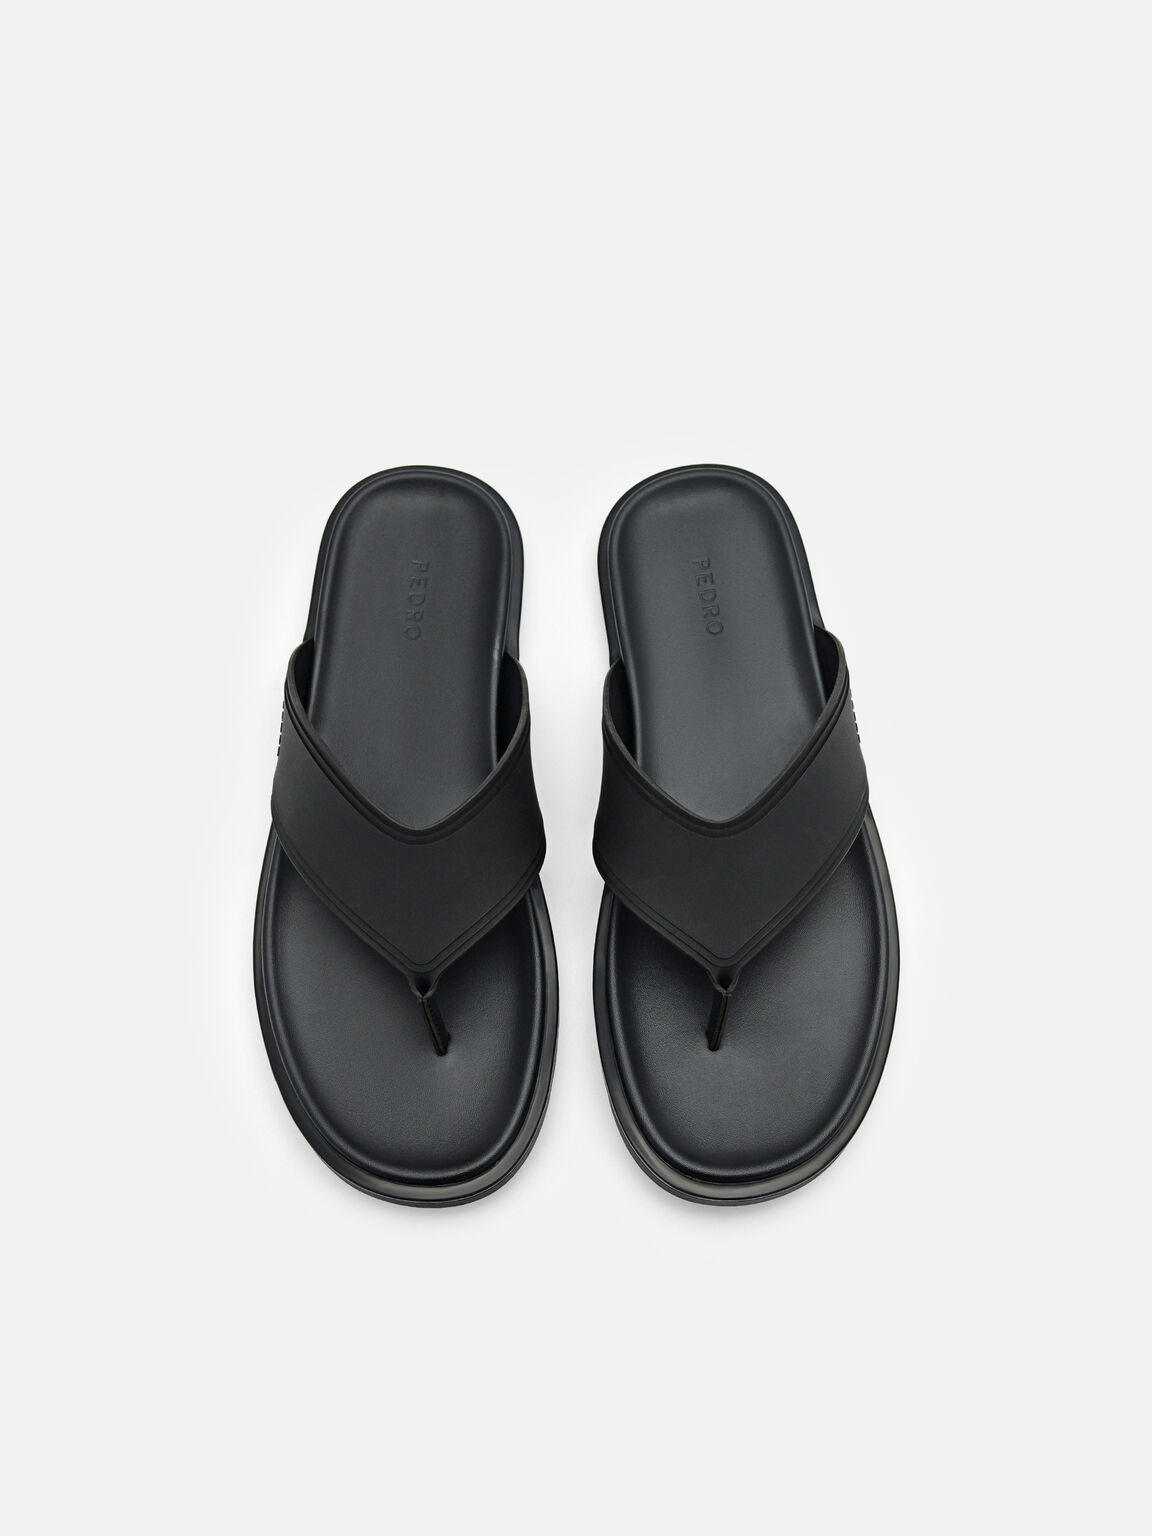 Pascal Thong Sandals, Black